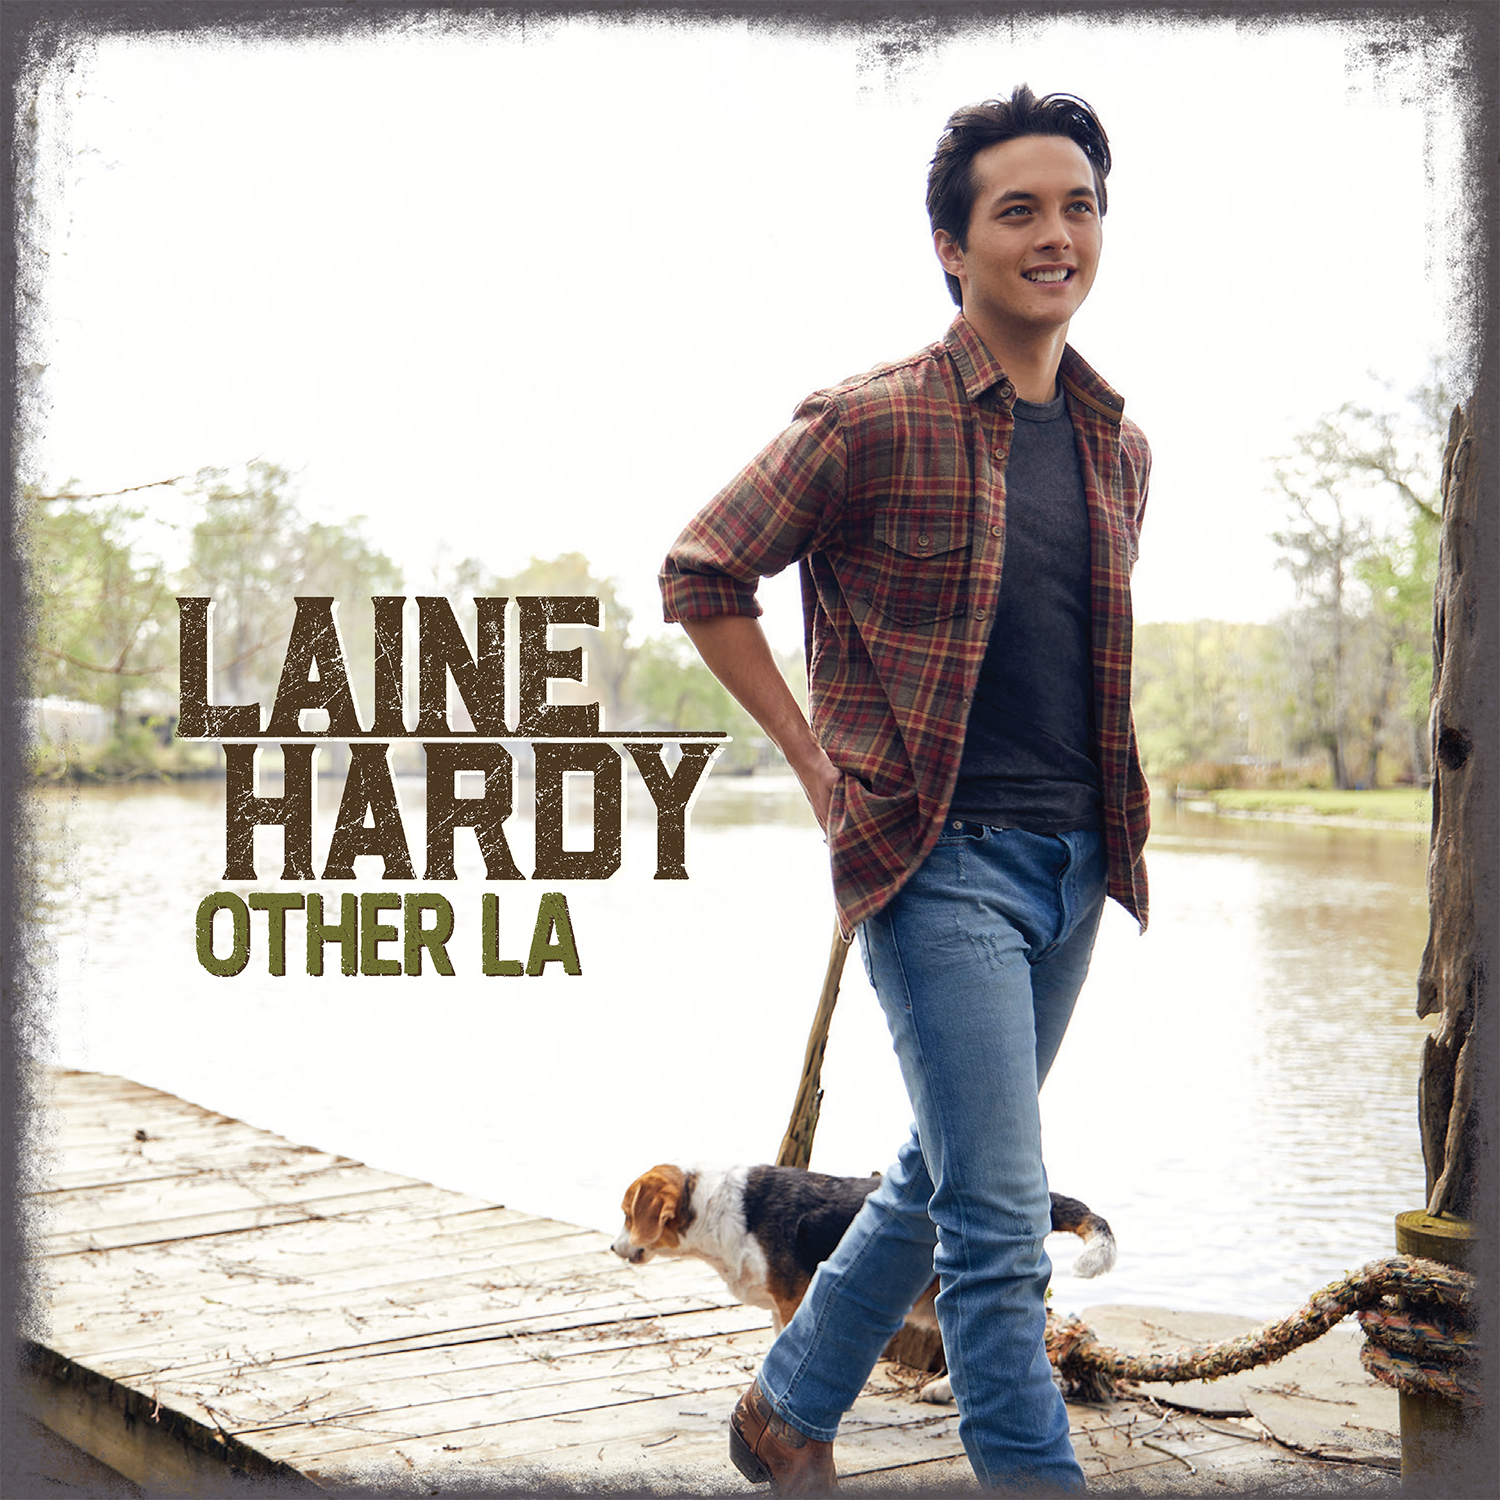 Laine Hardy Other LA